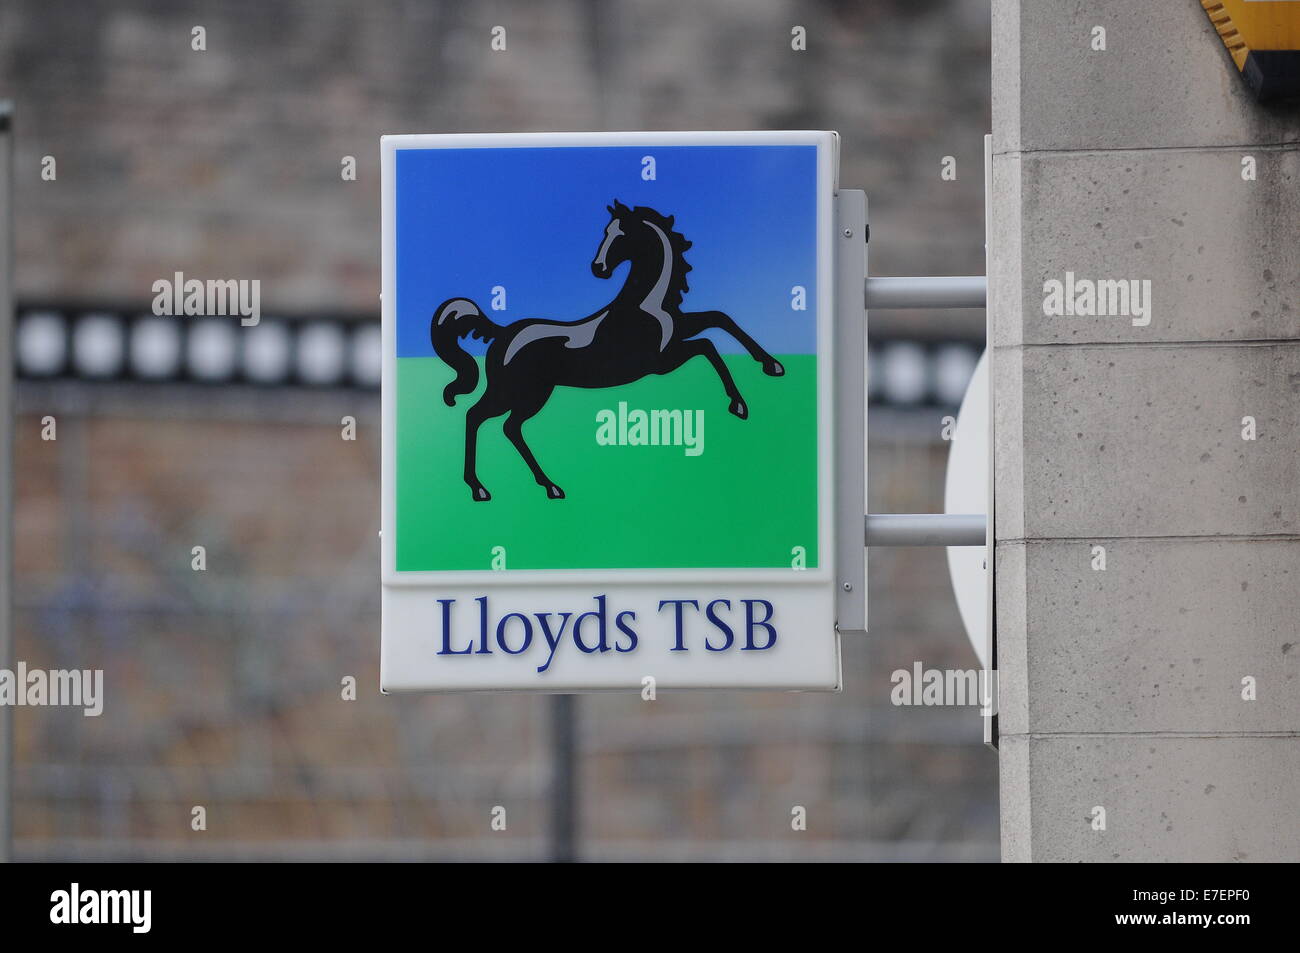 Lloyds TSB bank sign logo. Stock Photo